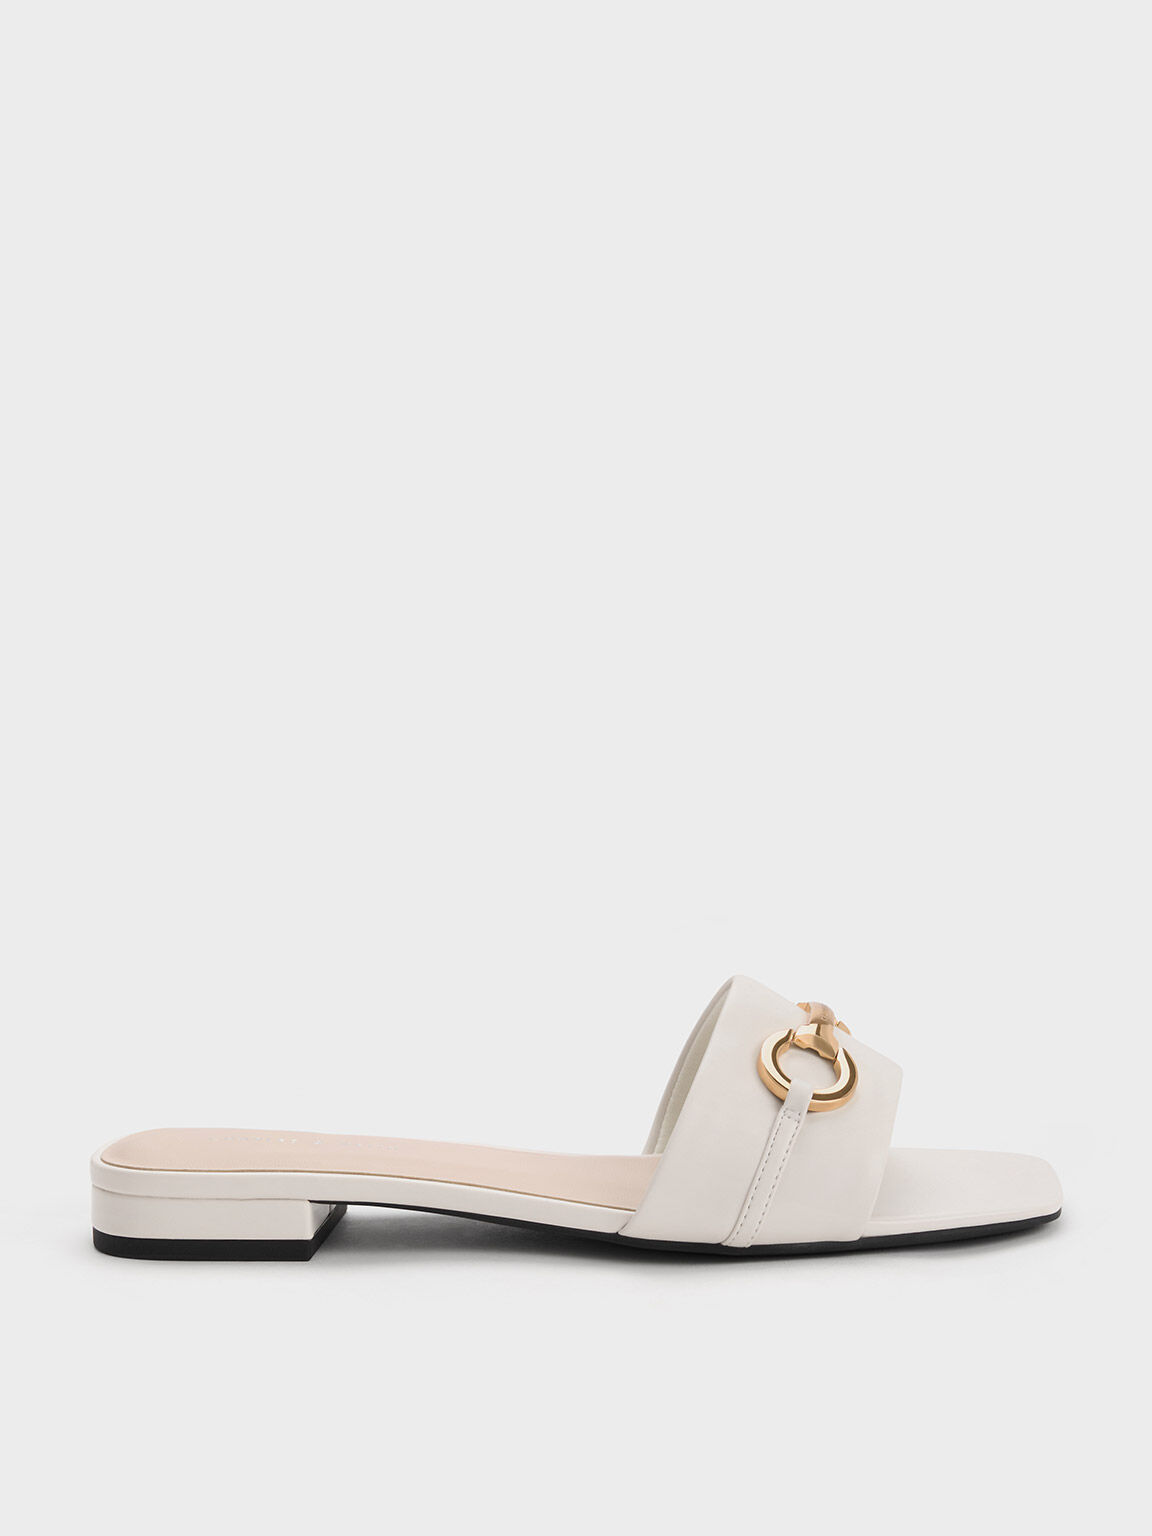 Metallic Bar Slide Sandals, White, hi-res